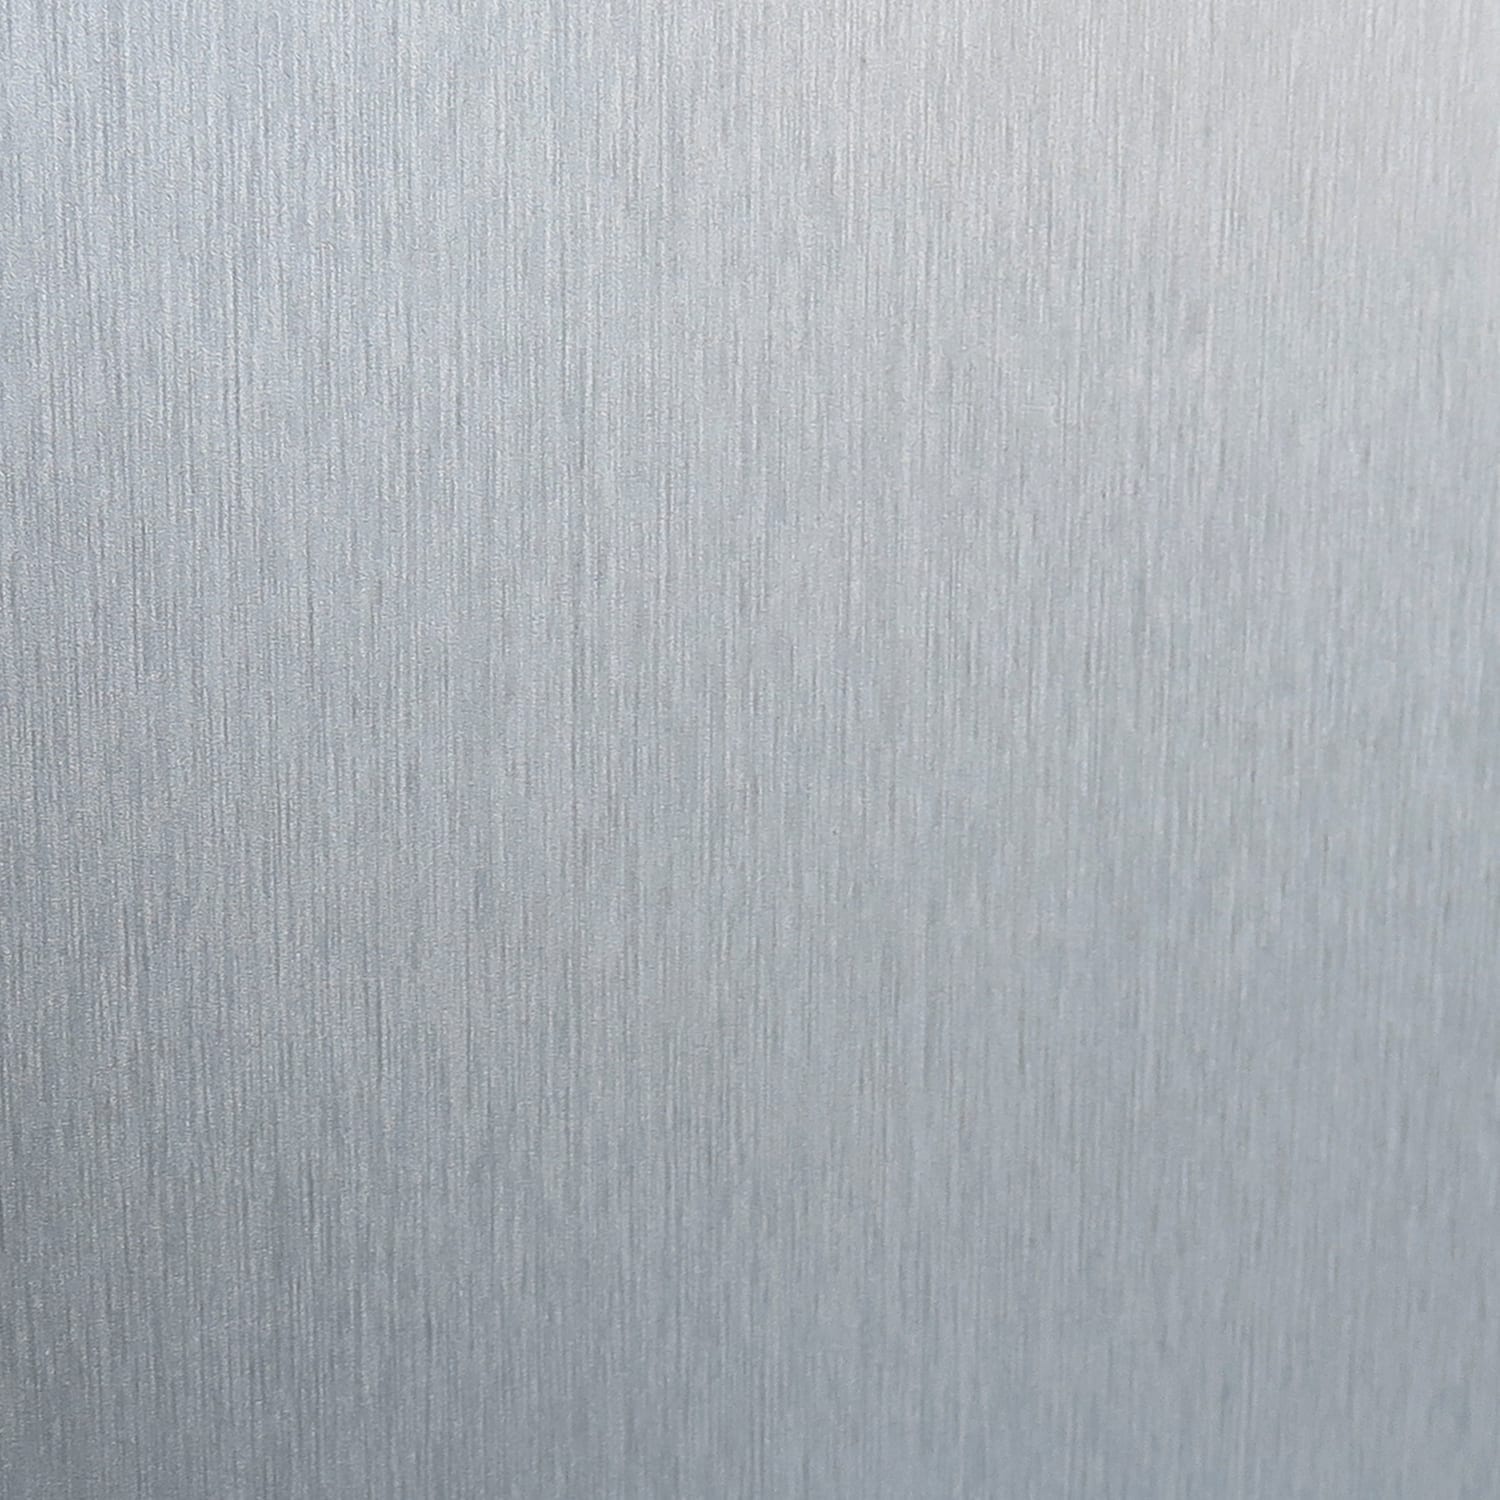 Subtle texture in silver colour square